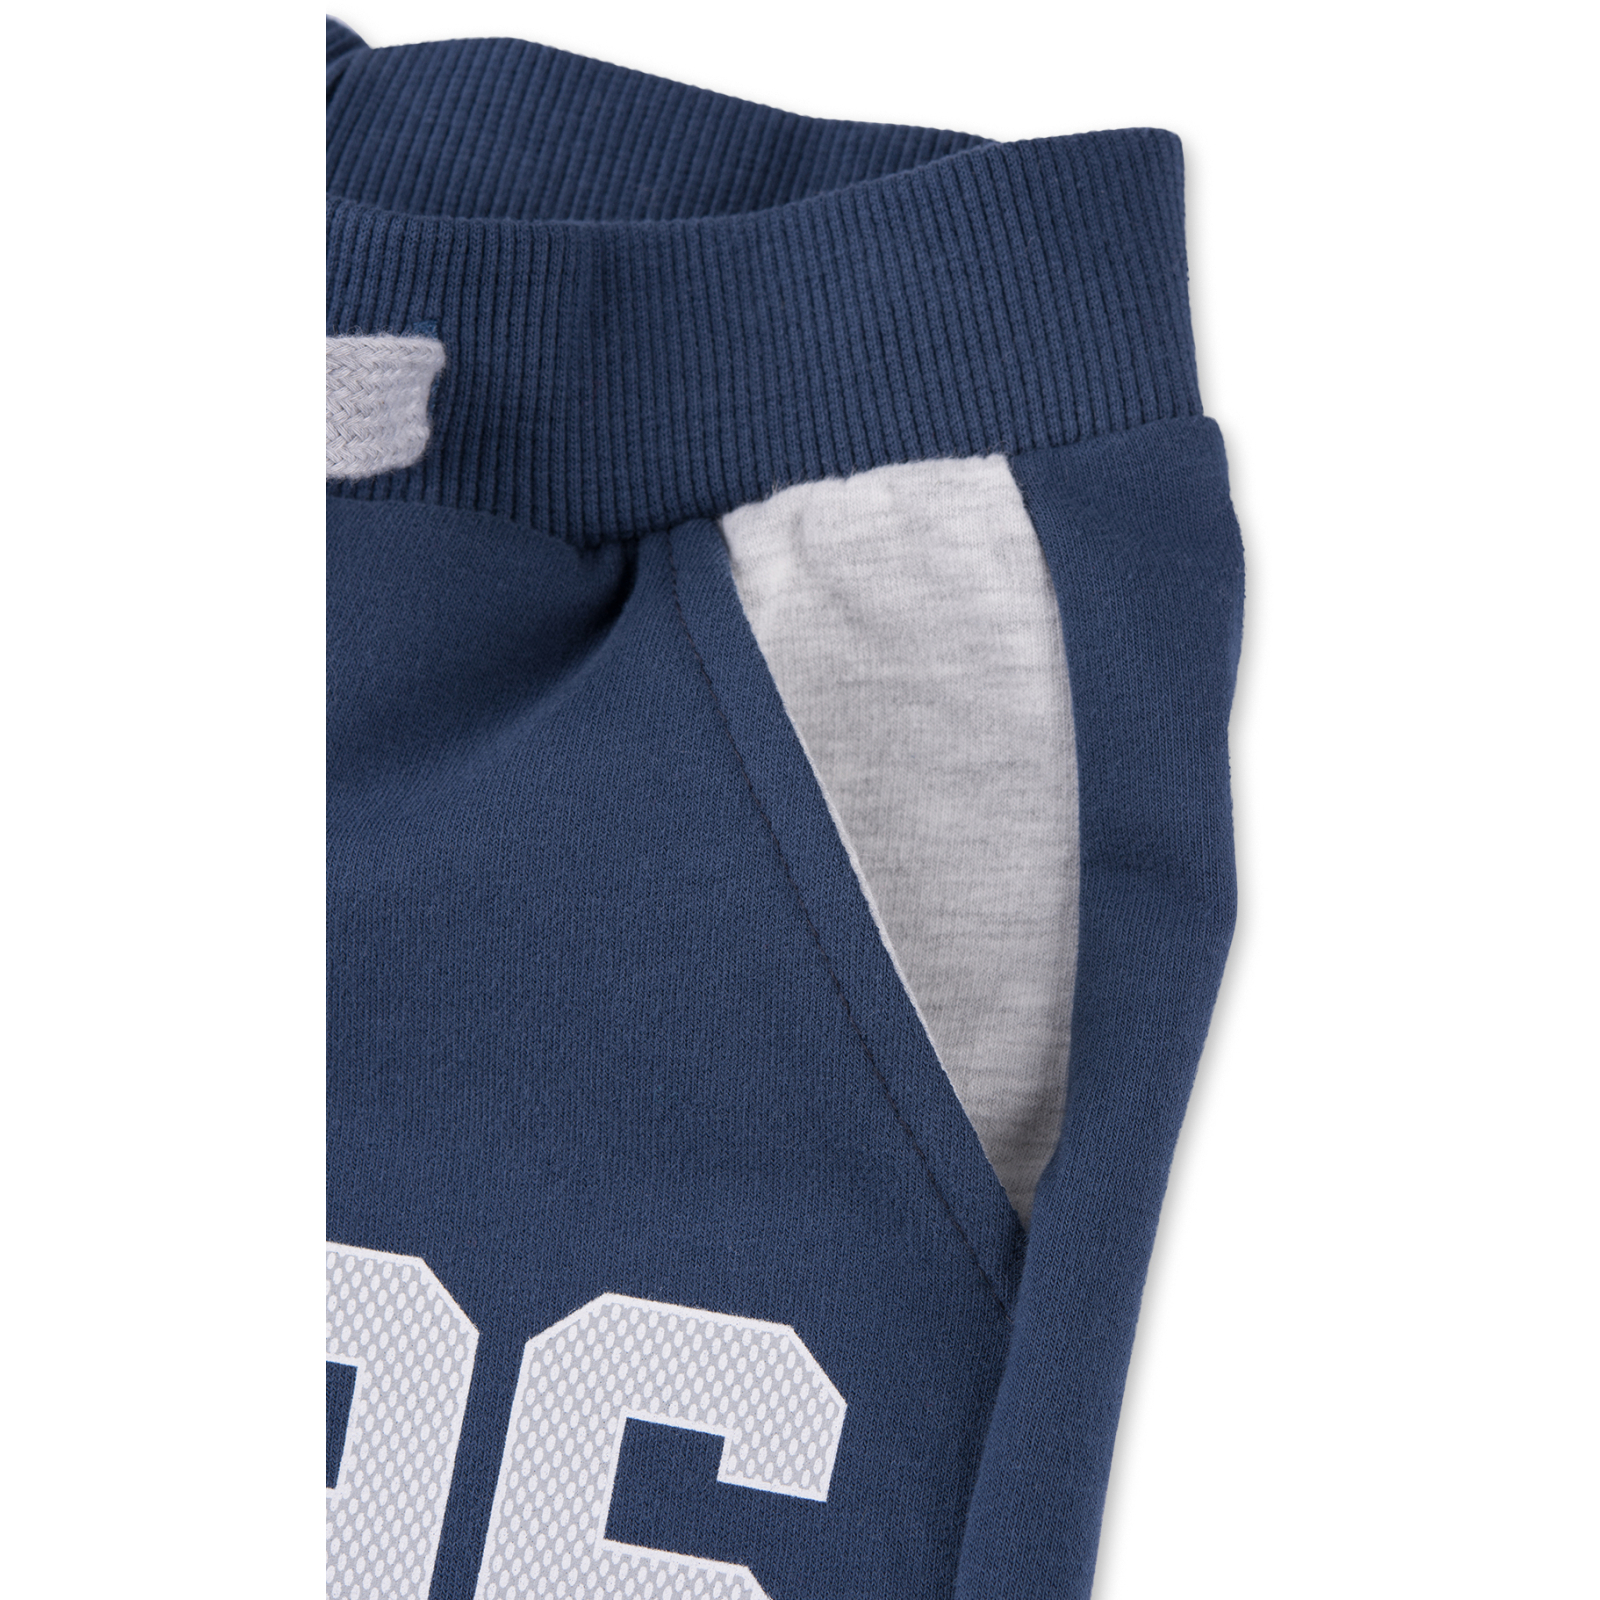 Спортивный костюм Breeze серый меланж индиго "New York" (7938-92B-gray-blue) изображение 6